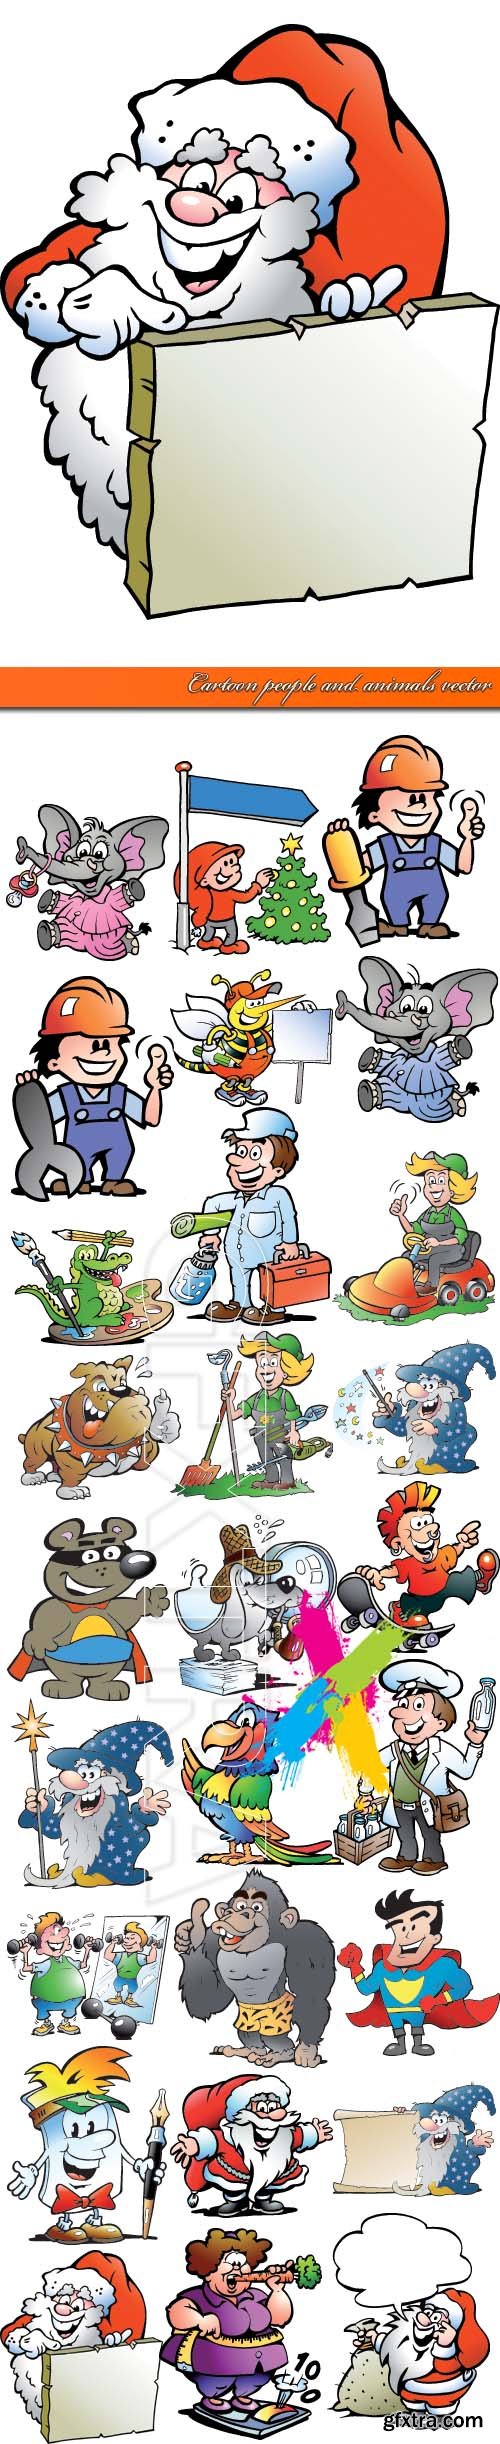 Cartoon people and animals vector